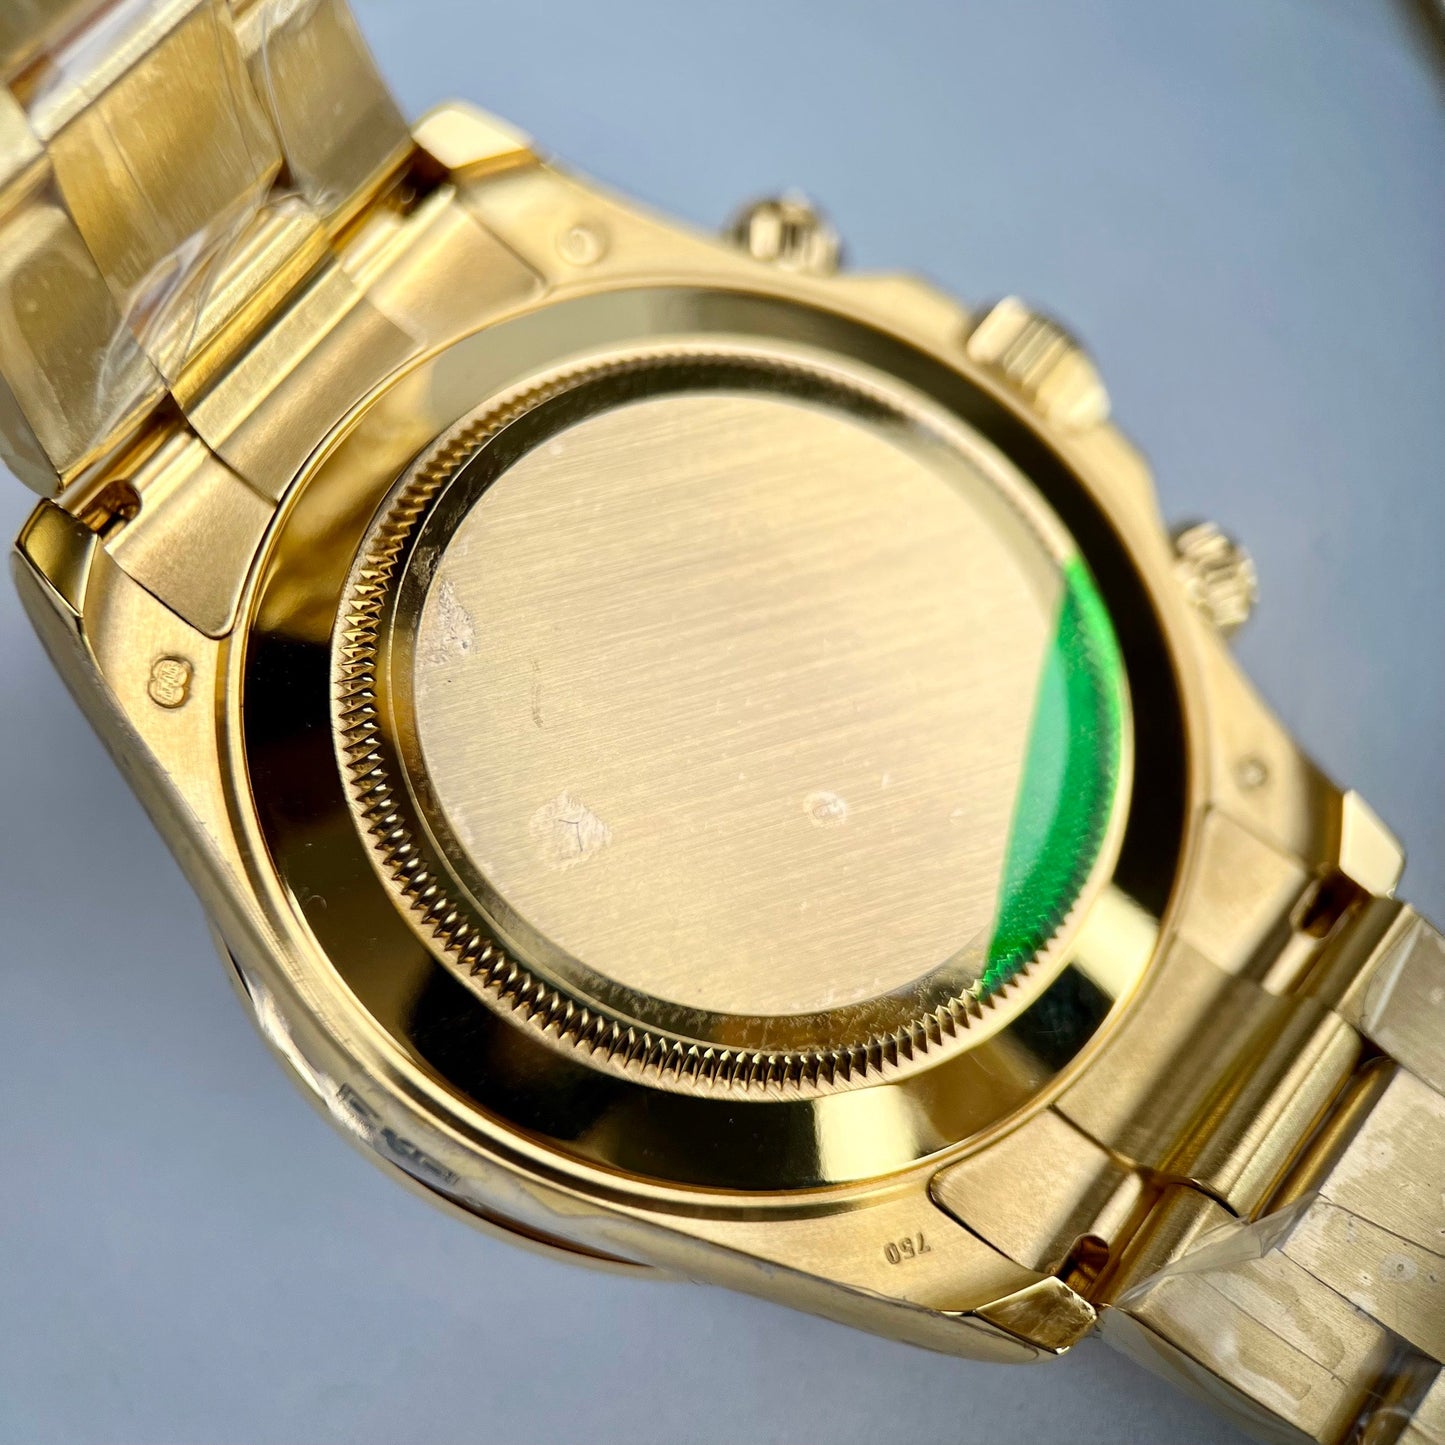 Rolex Cosmograph Daytona Rainbow 116598 RBOW-78608 [Custom gold, moissanite, ruby stone]